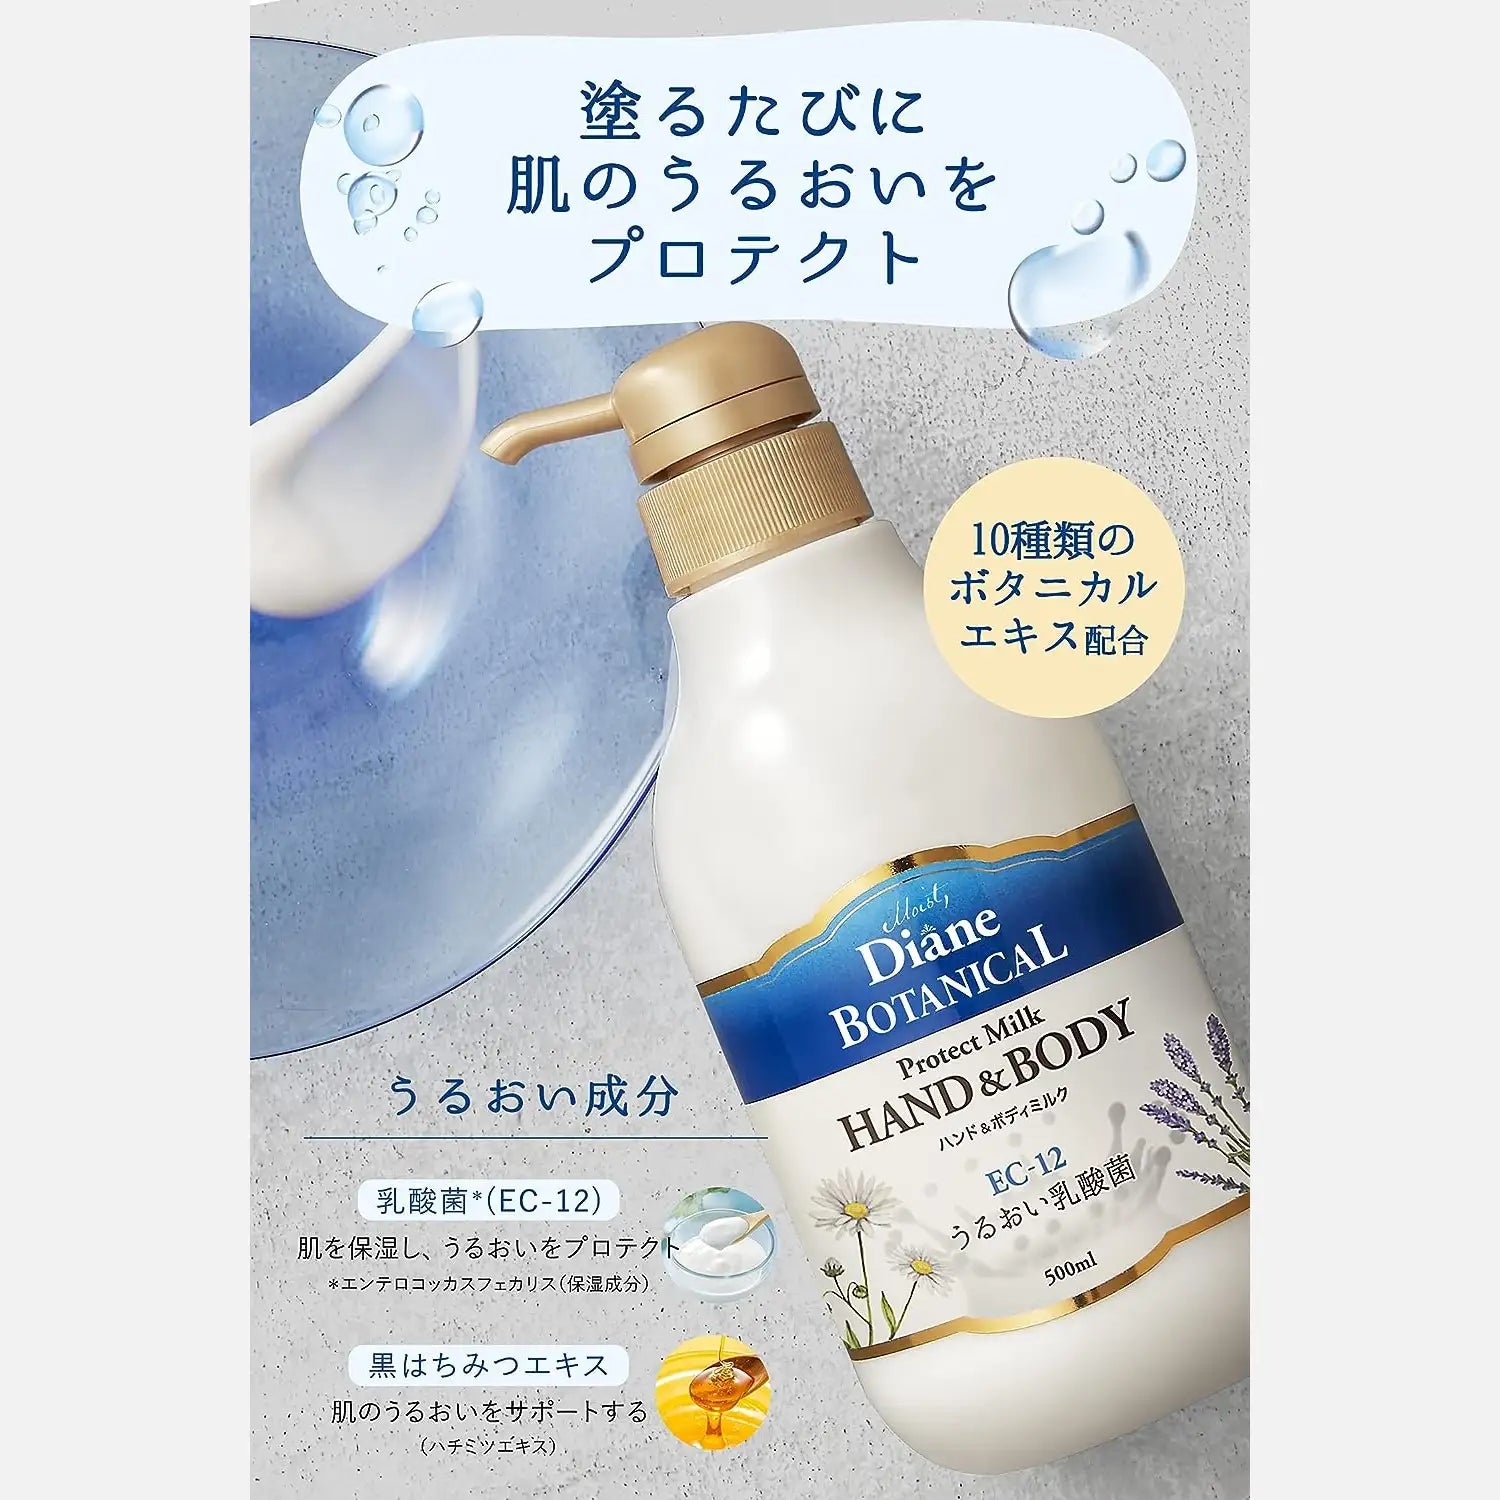 Diane Botanical Deep Moist Body Milk Verbena & Honey 500ml - Buy Me Japan